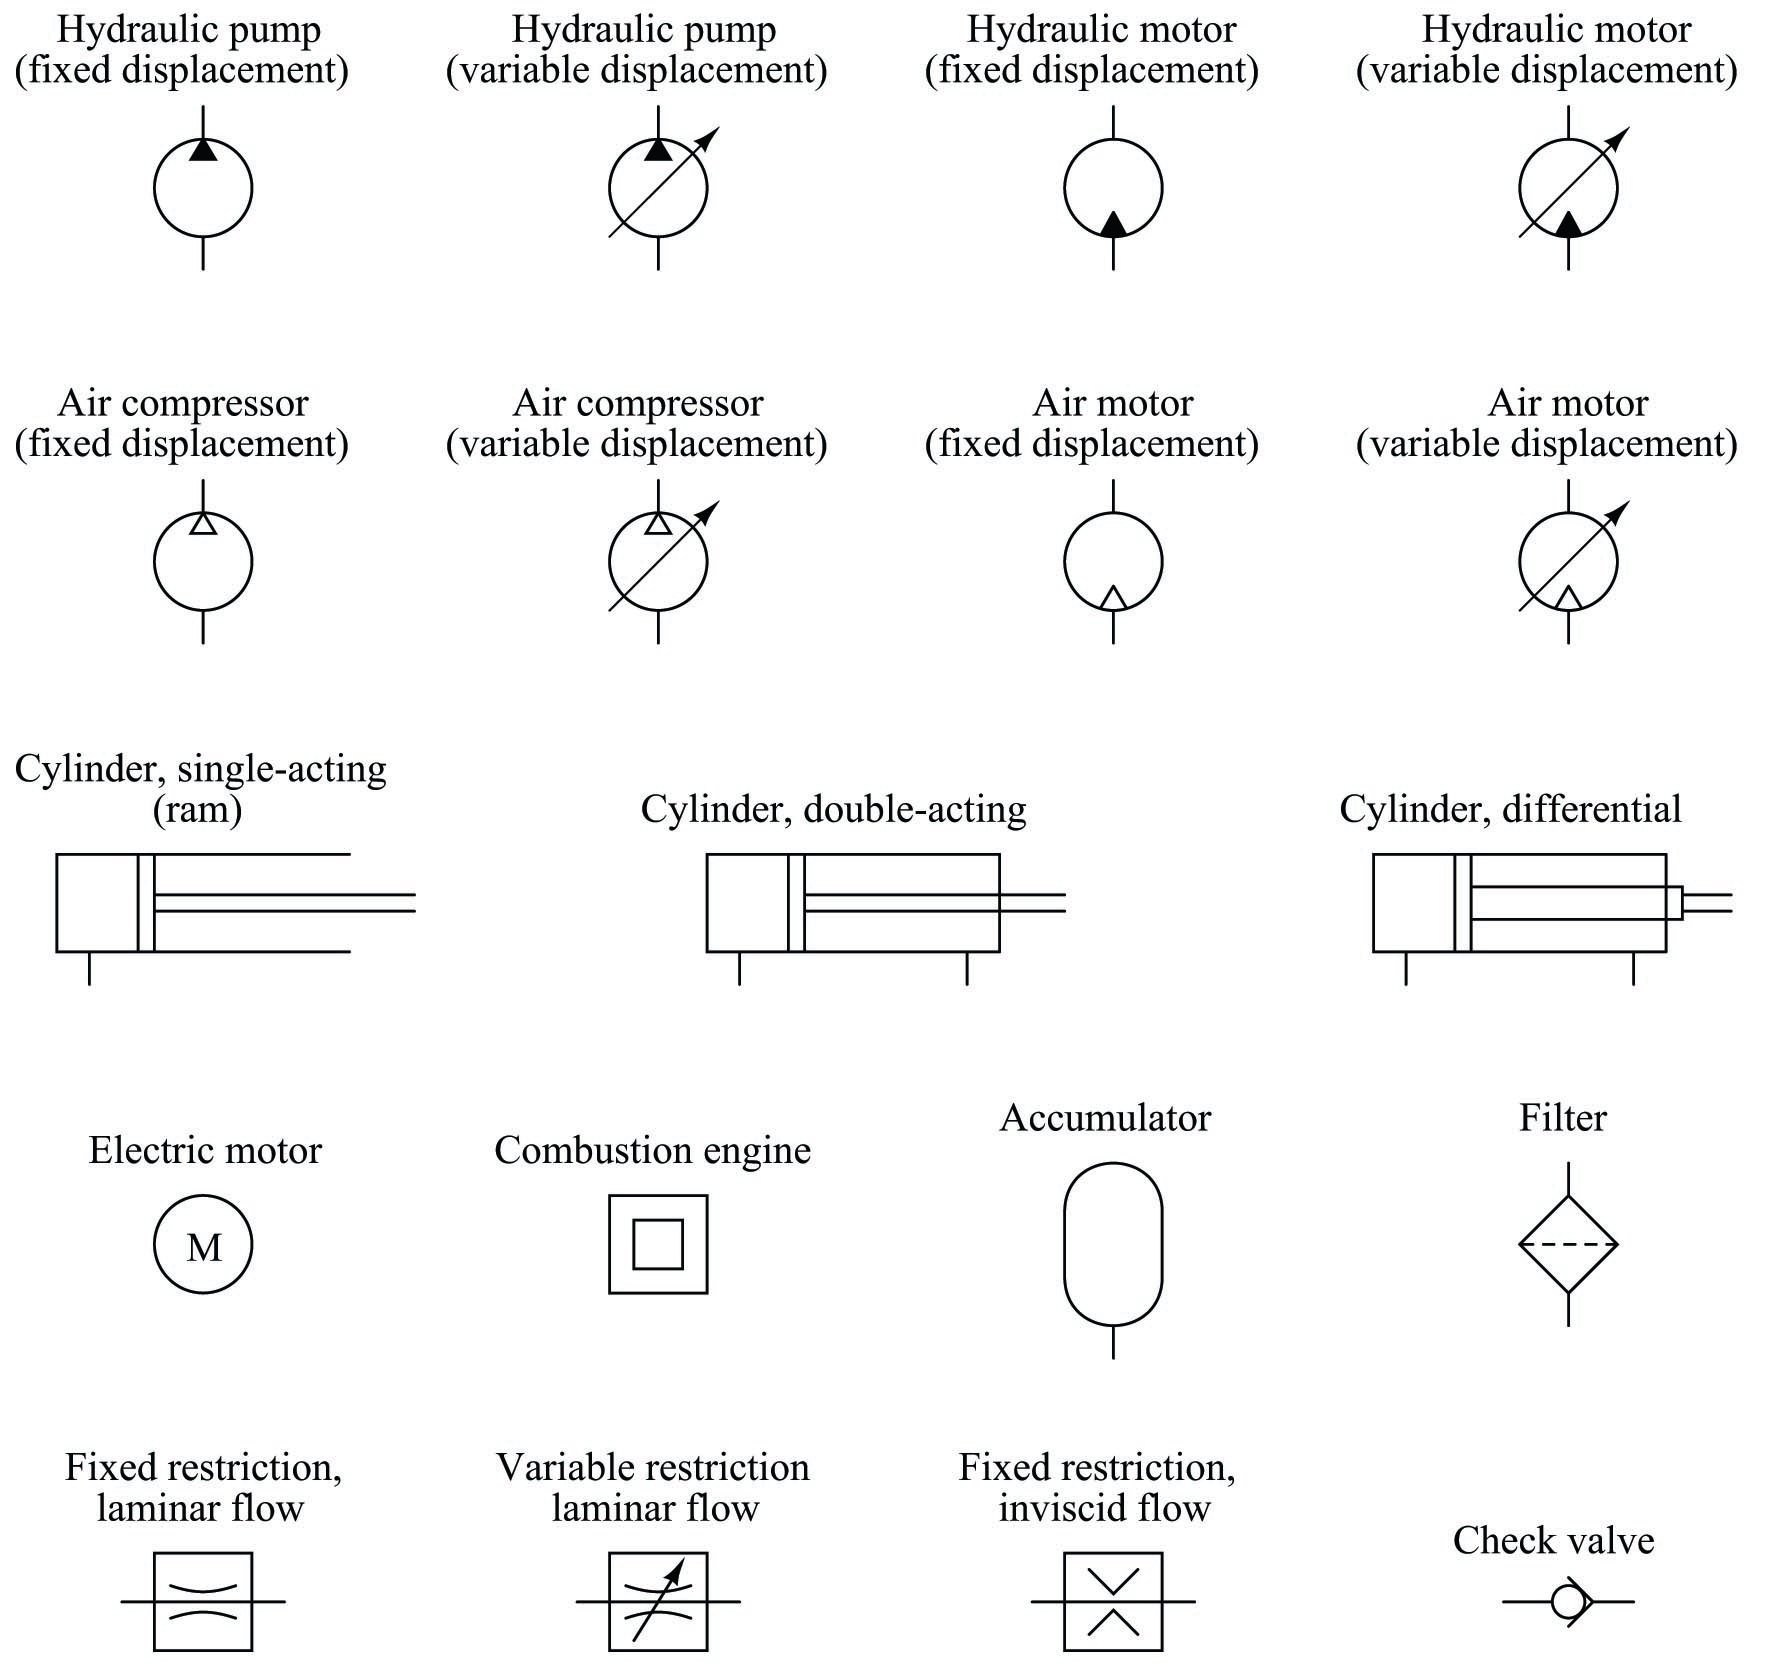 Instrument and Process Equipment Symbols | Control and Instrumentation ...